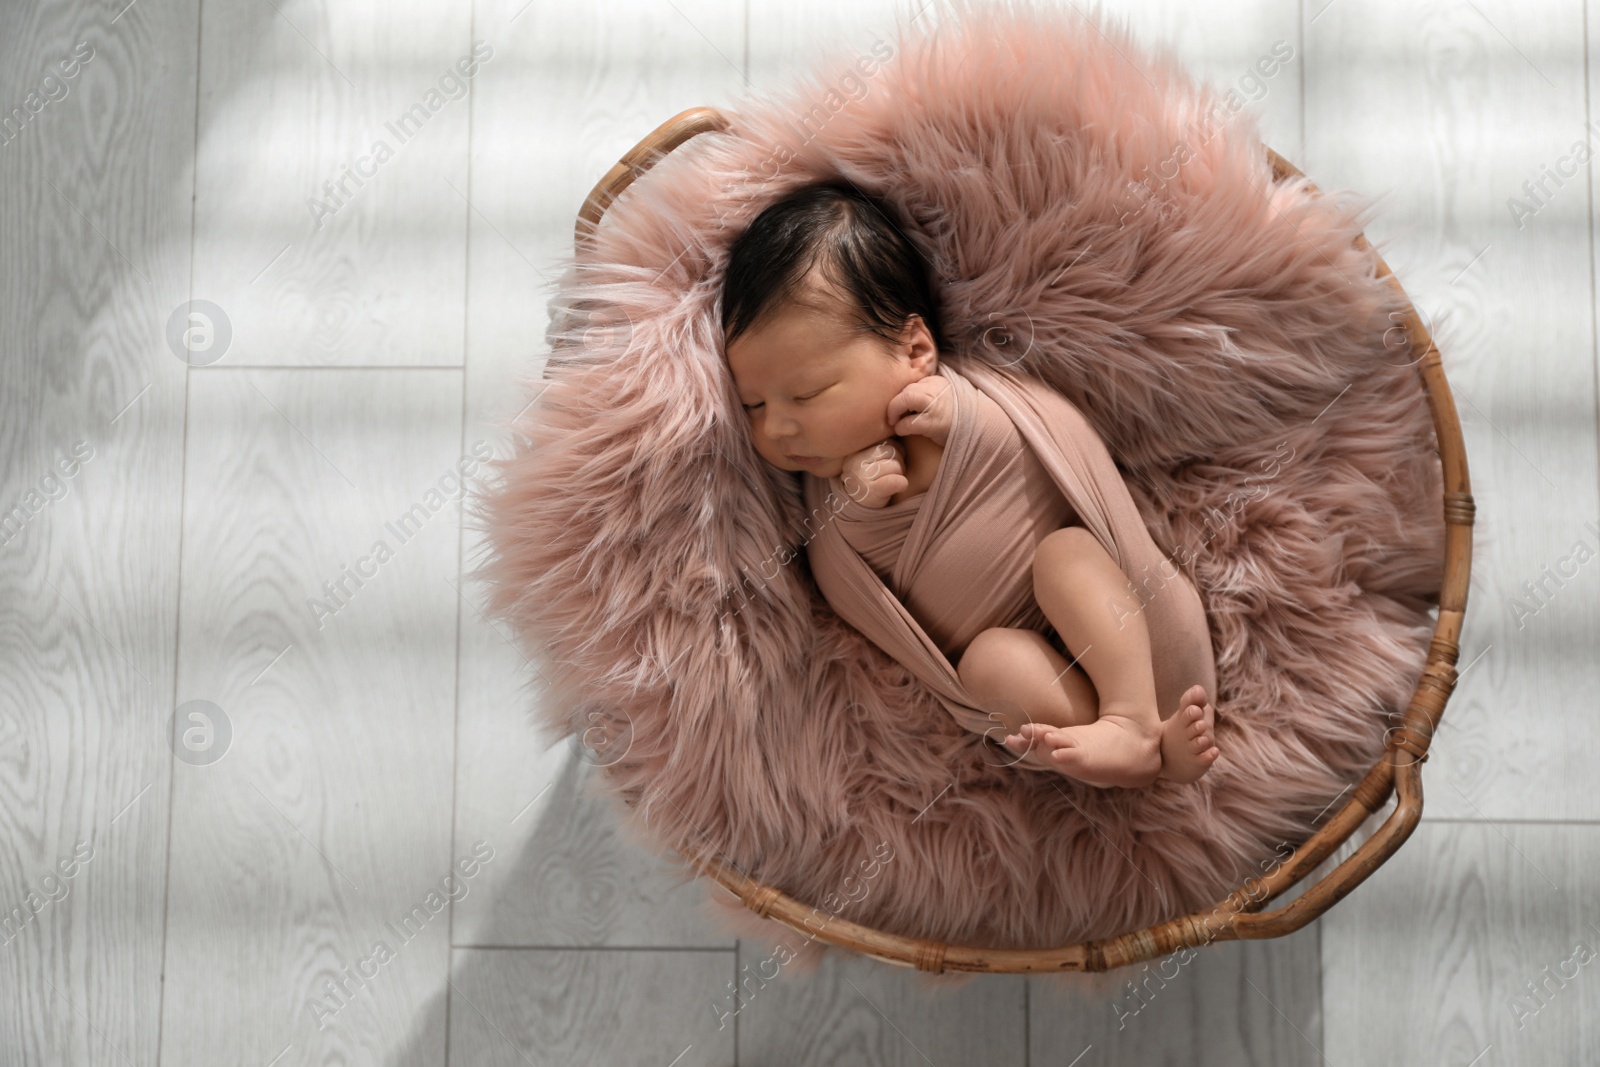 Photo of Cute newborn baby sleeping in wicker basket, top view